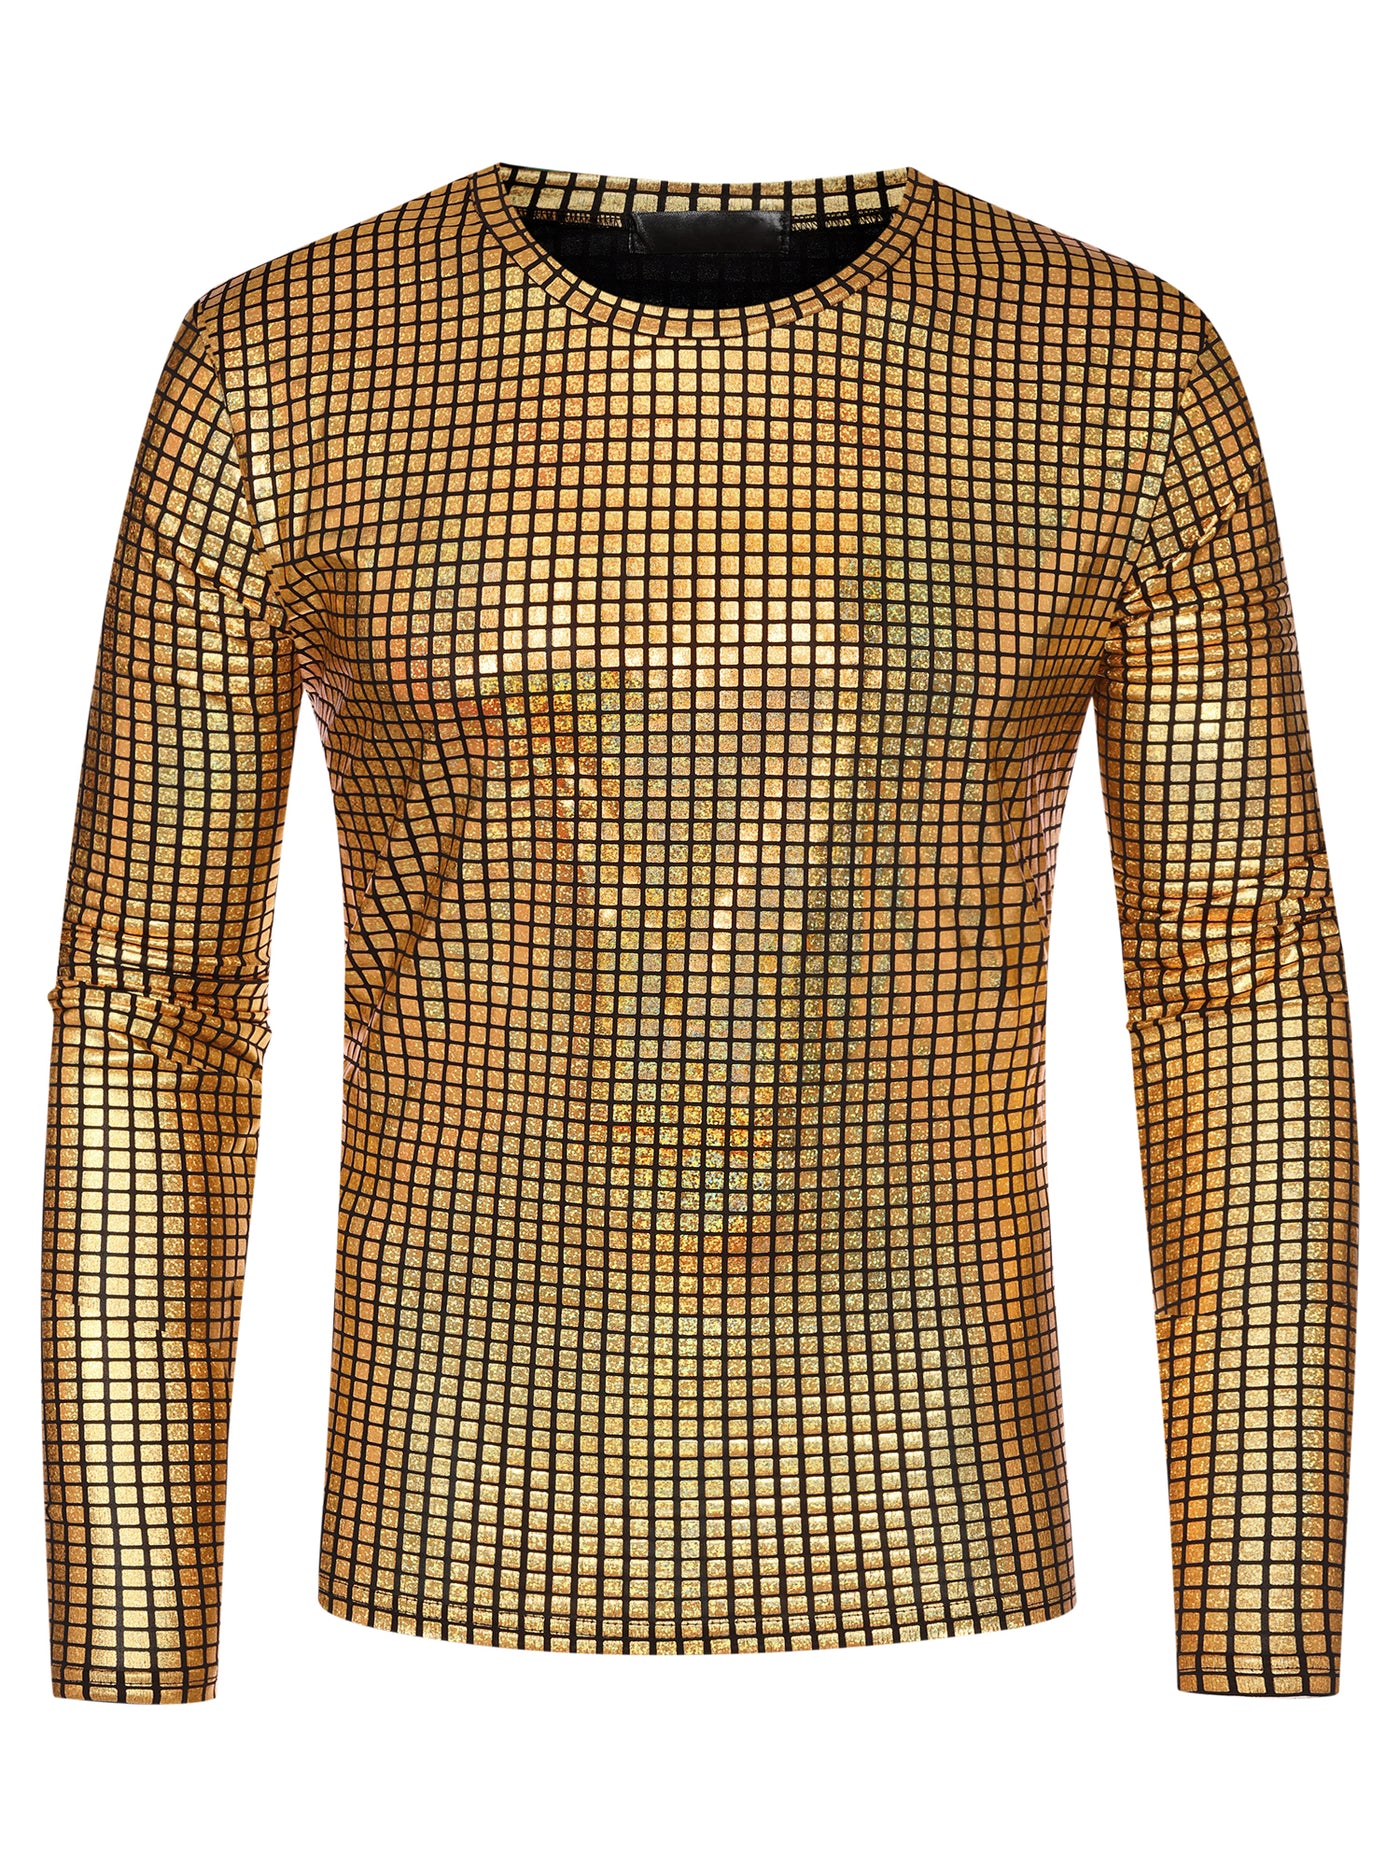 Bublédon Metallic T-Shirt for Men's Crew Neck Long Sleeves Party Club Shiny Top